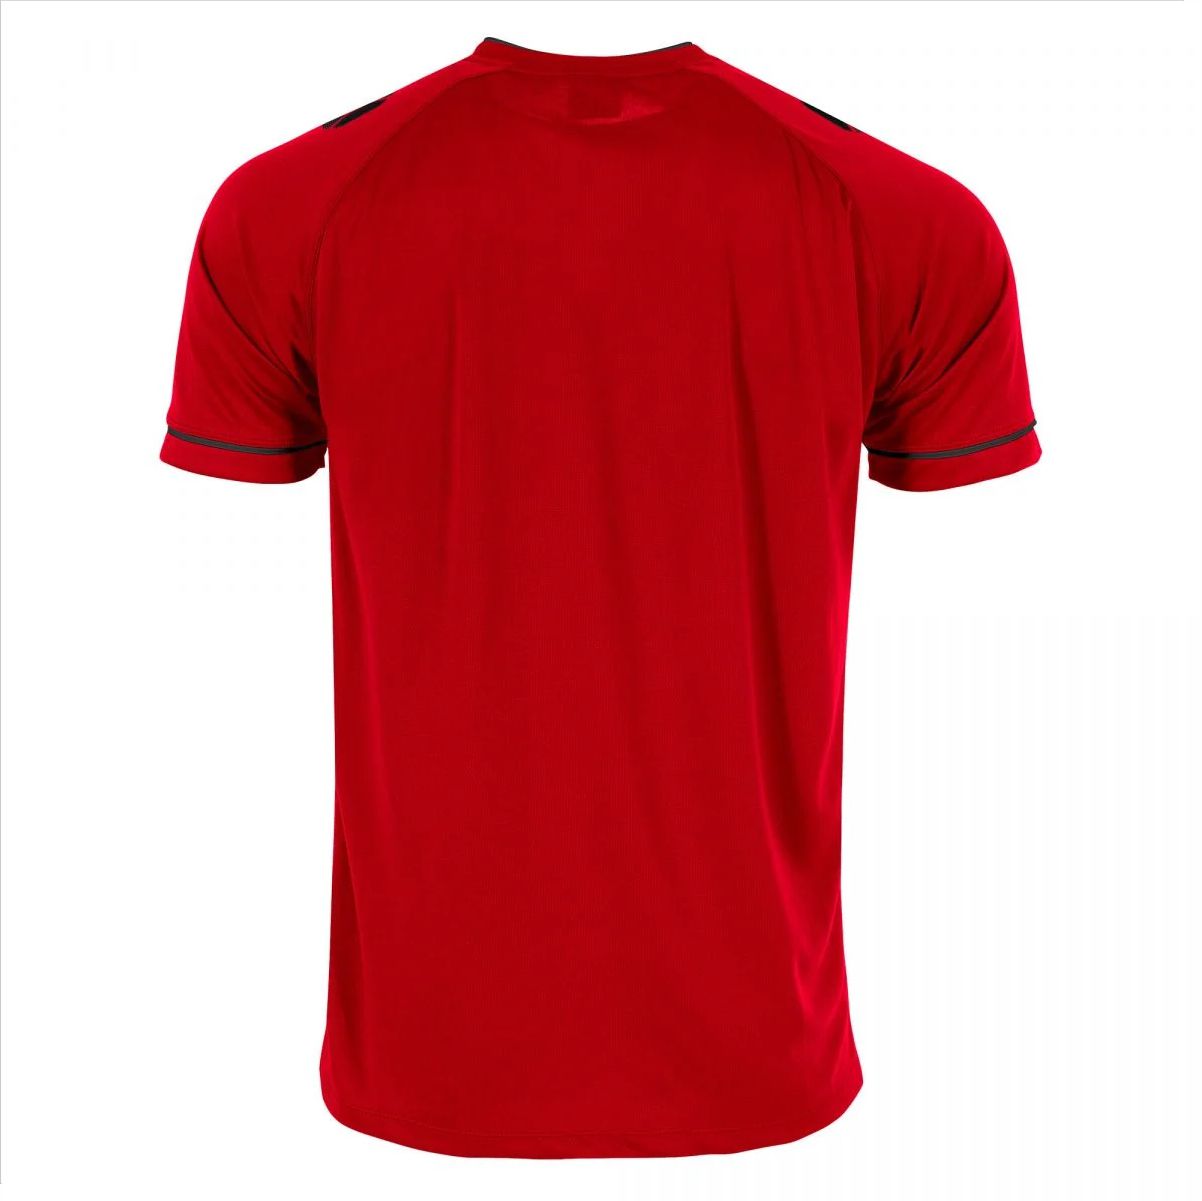 Stanno - Dash Shirt -Red & Black